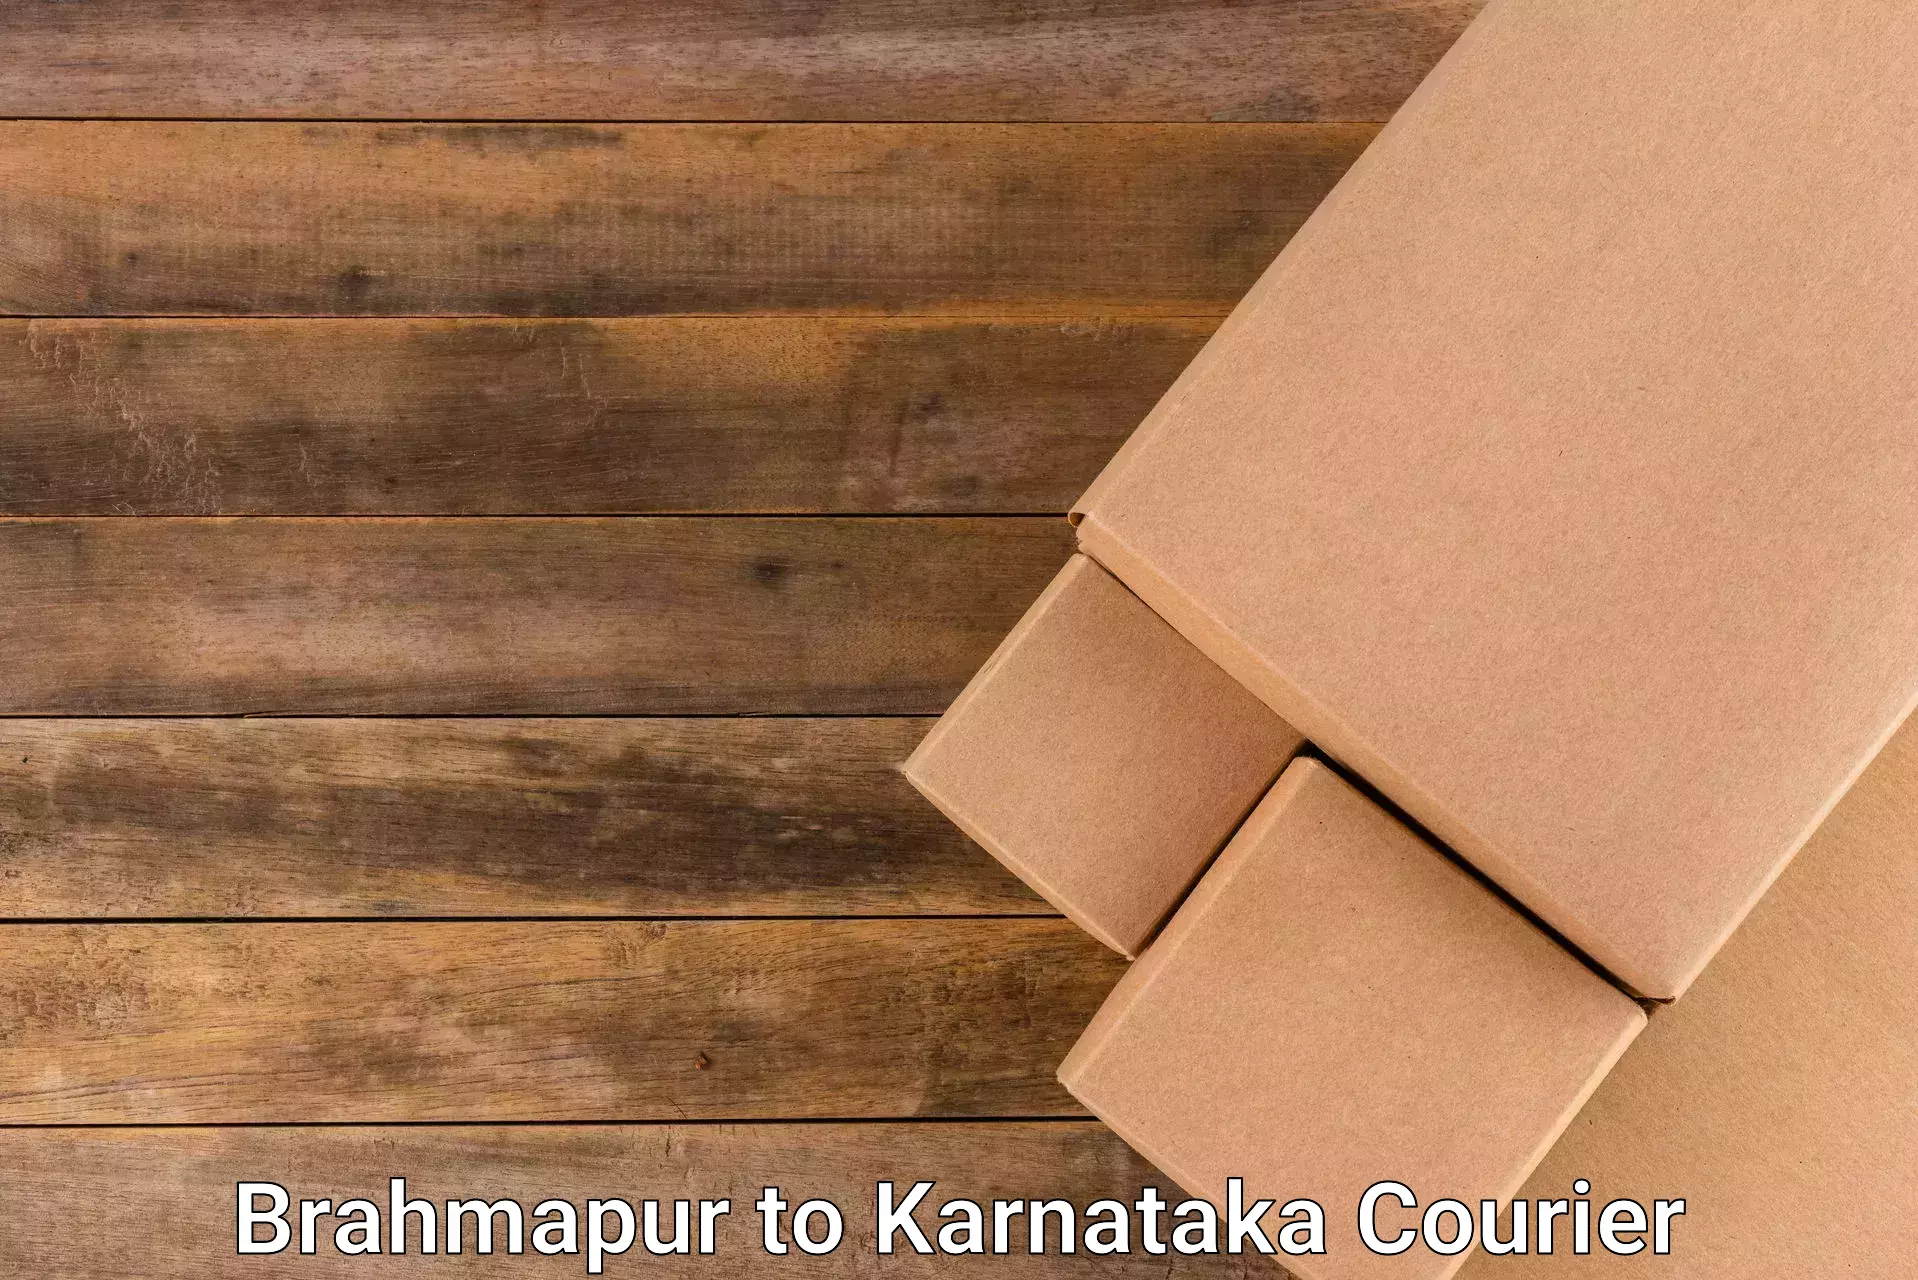 Diverse delivery methods Brahmapur to Karnataka